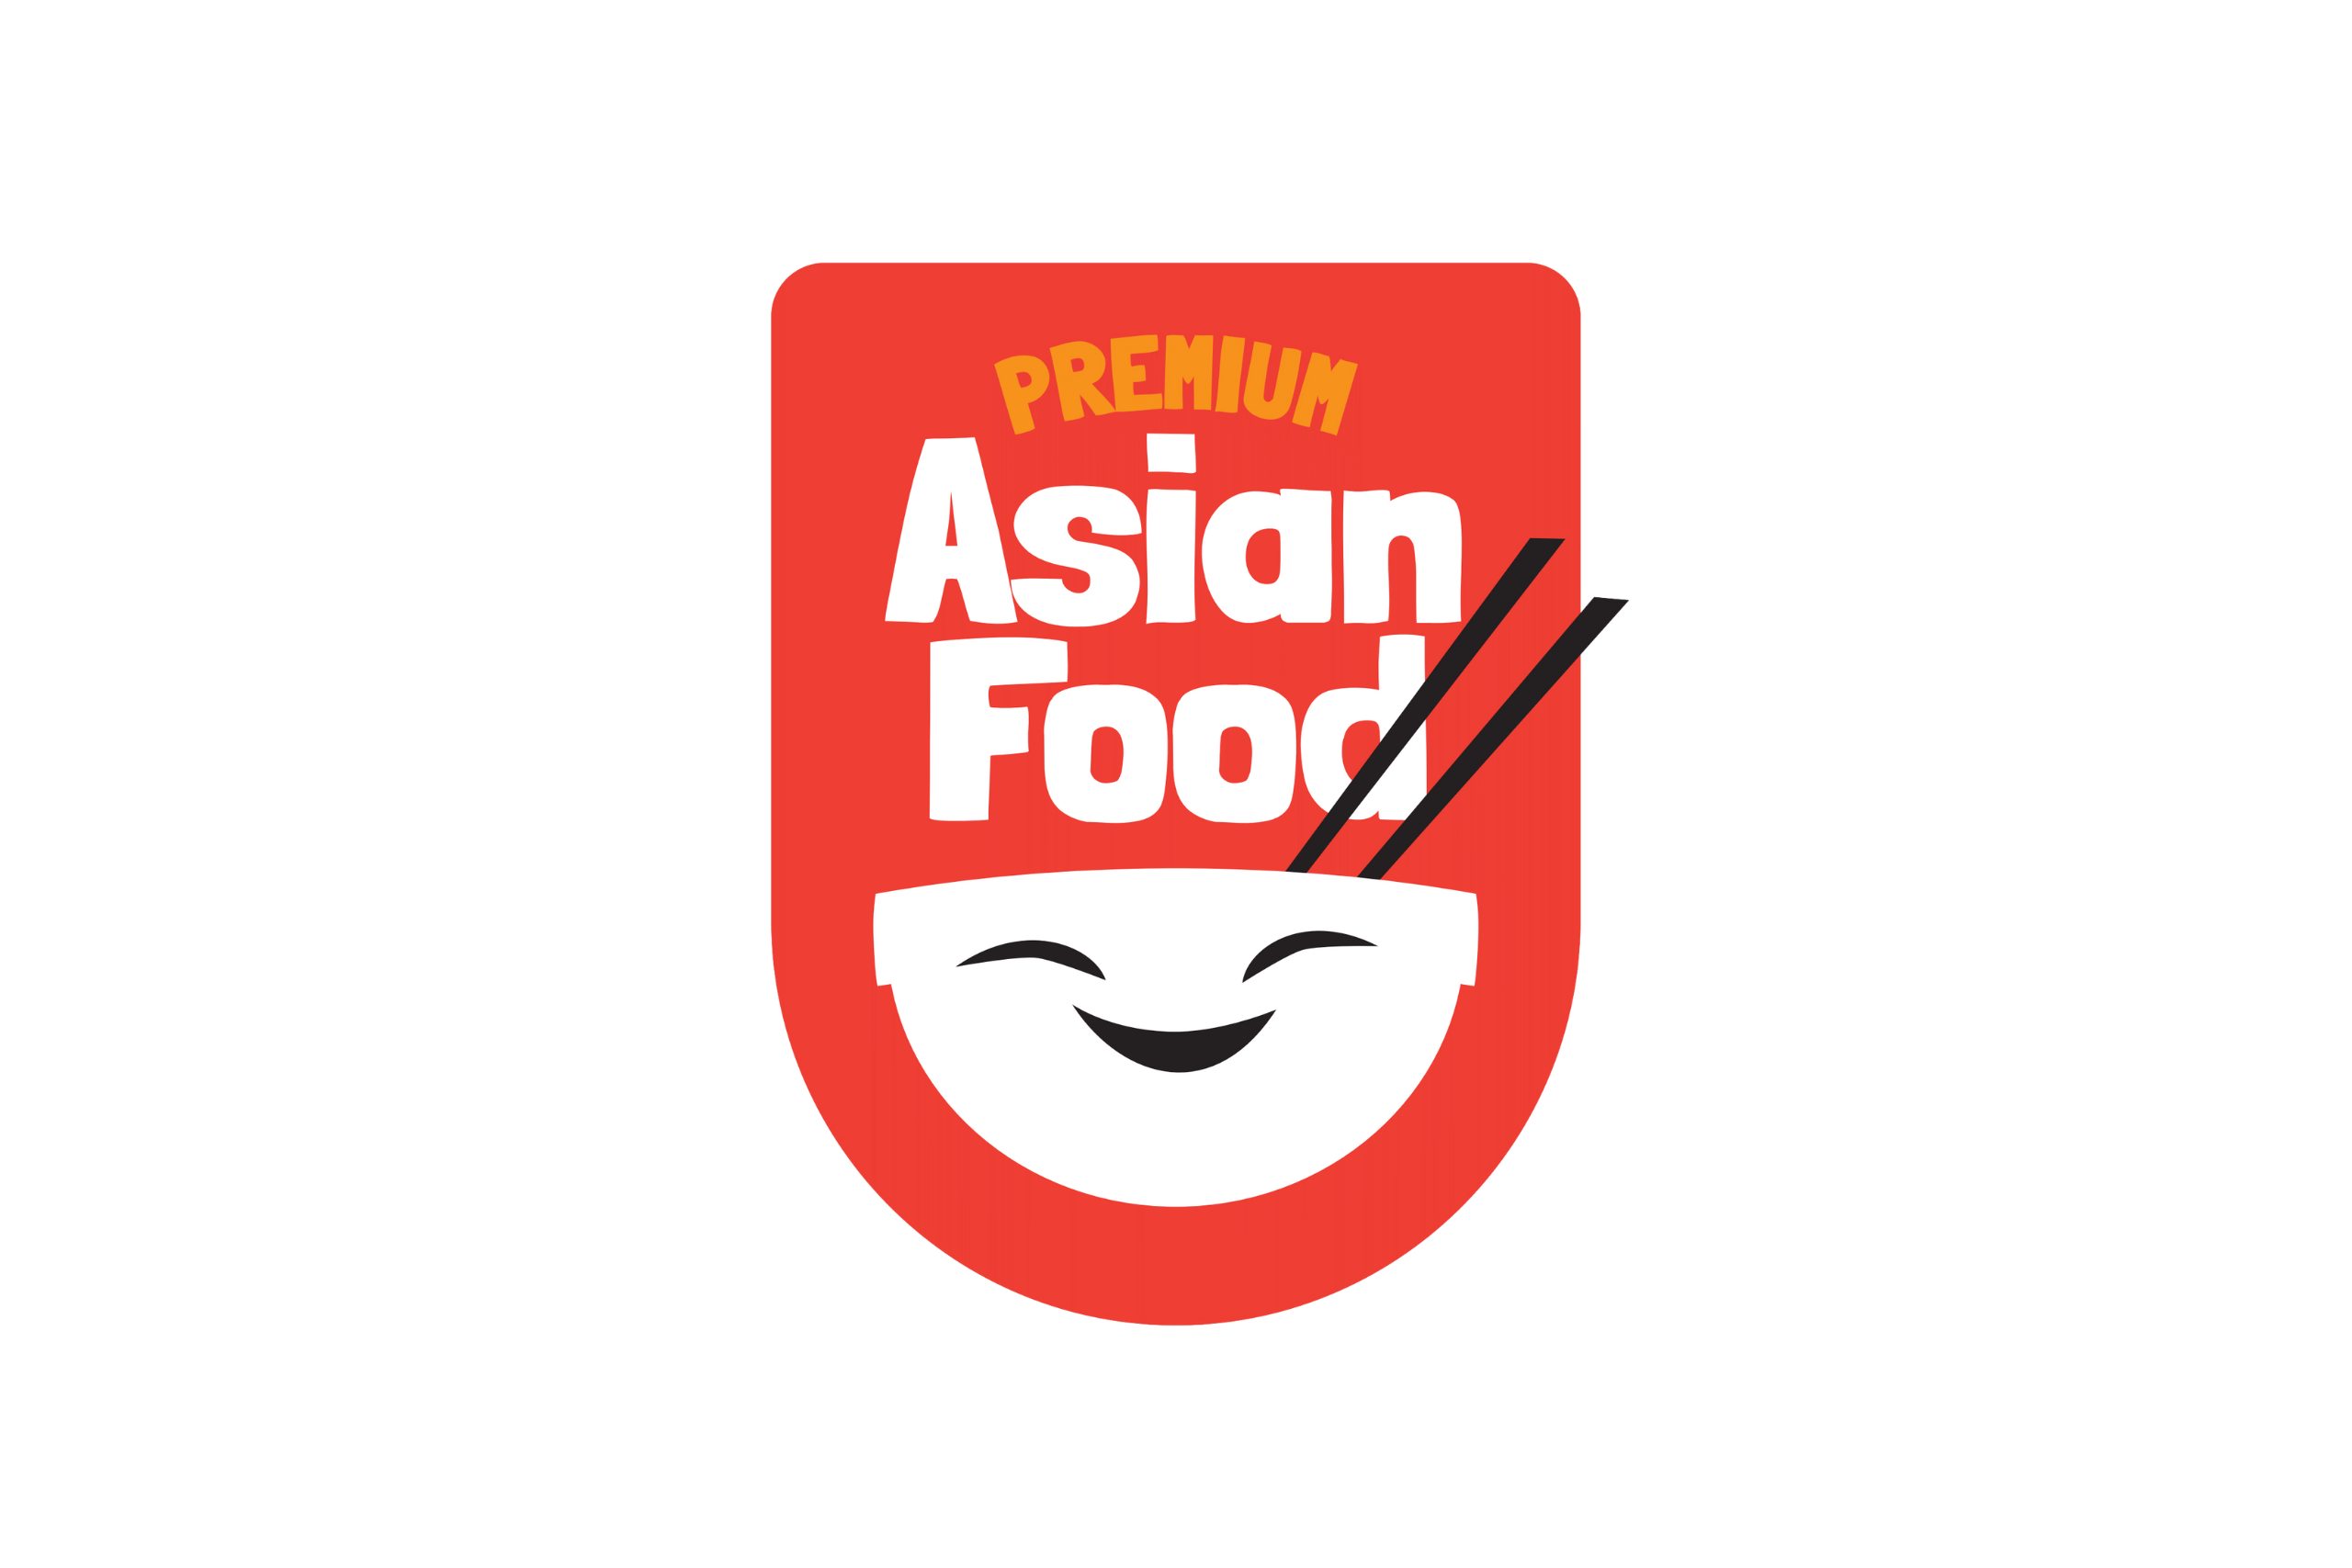 Premium Asian Food